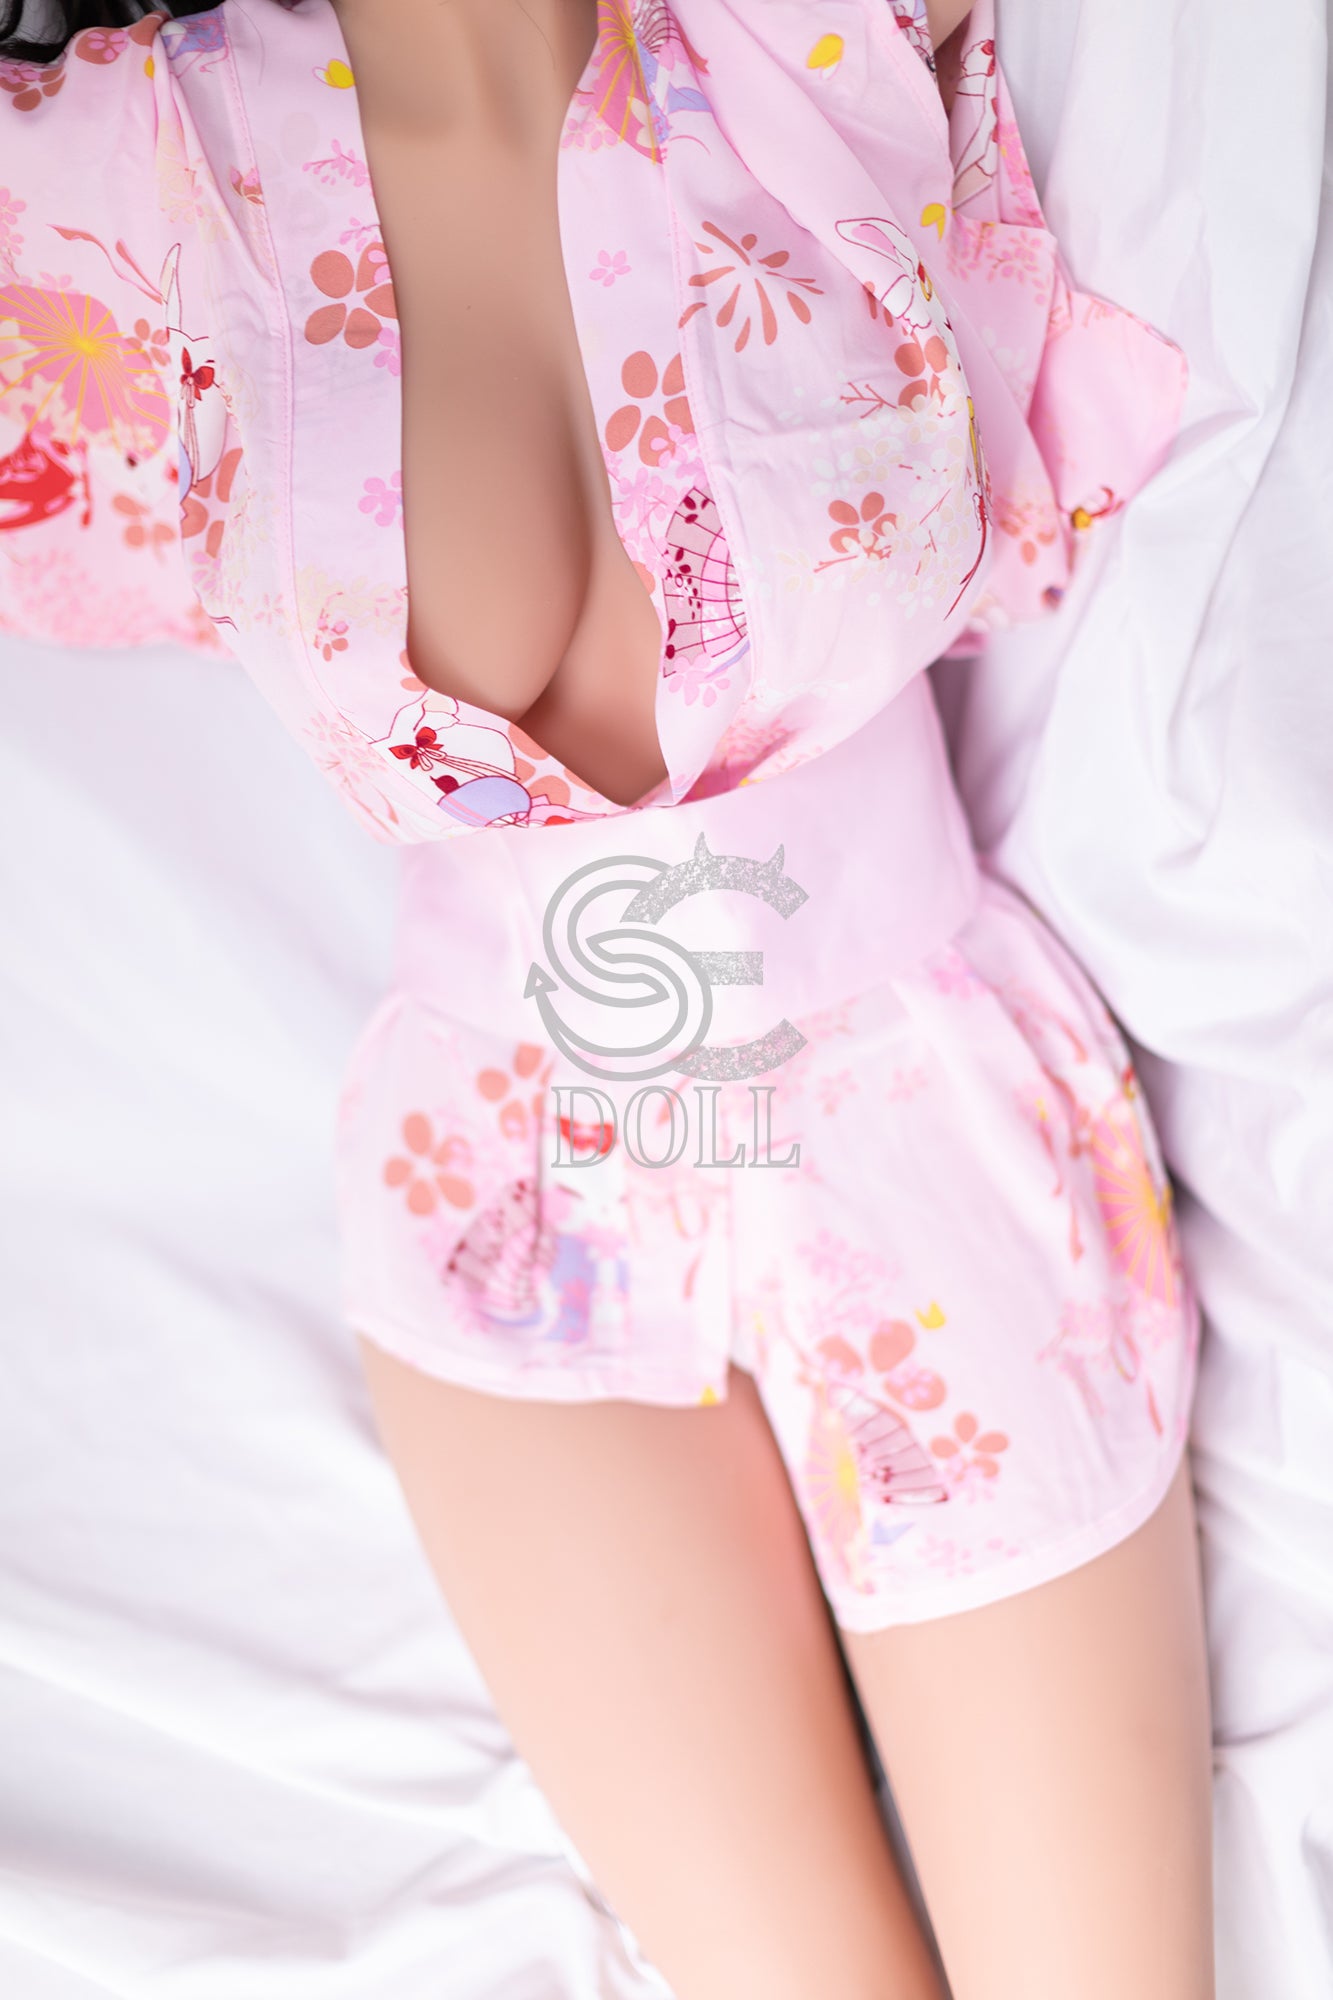 SEDOLL 161 cm F TPE - Kikuchi | Buy Sex Dolls at DOLLS ACTUALLY